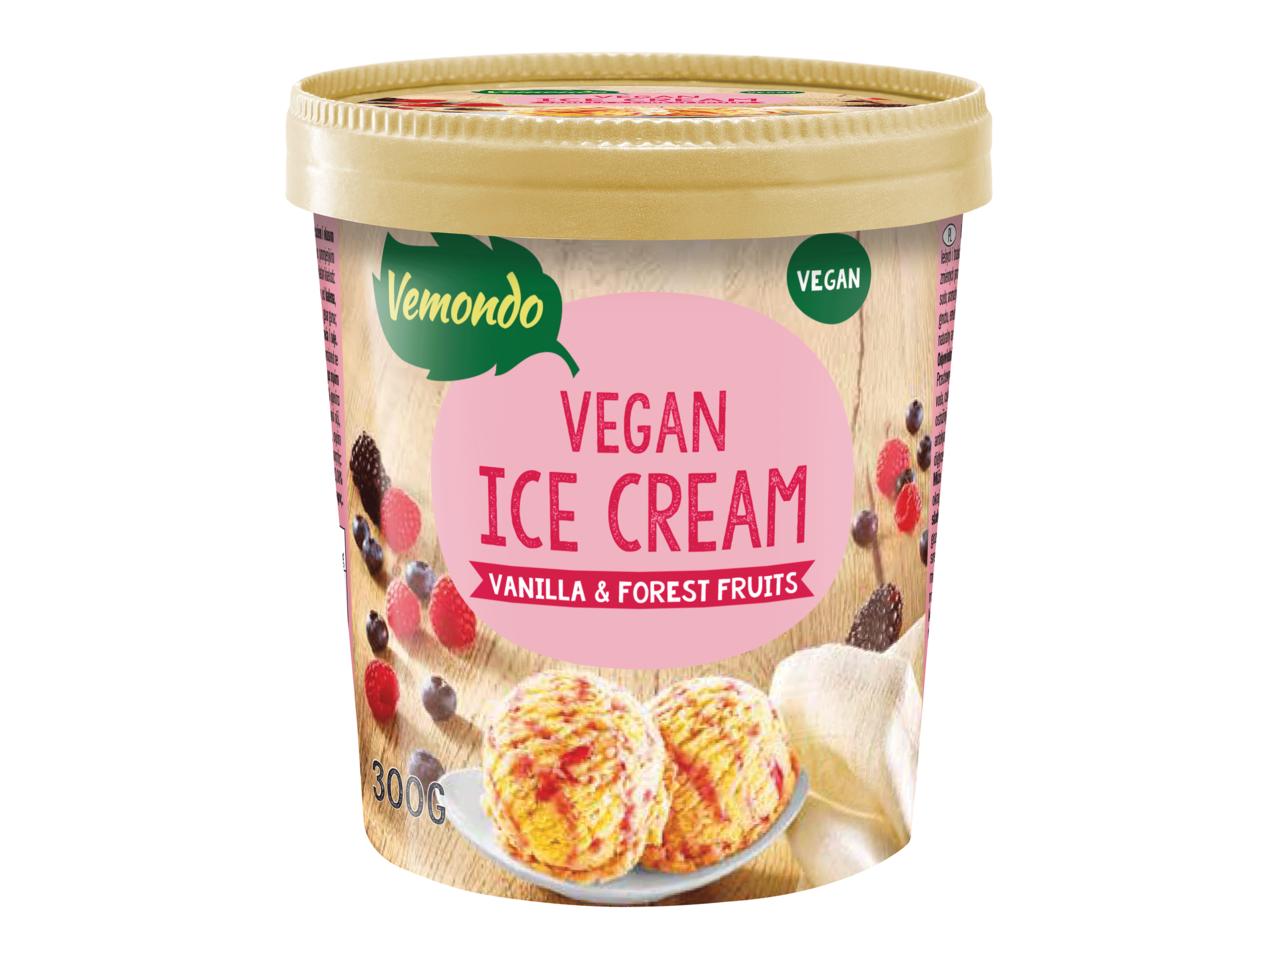 VEMONDO Vegan Ice Cream